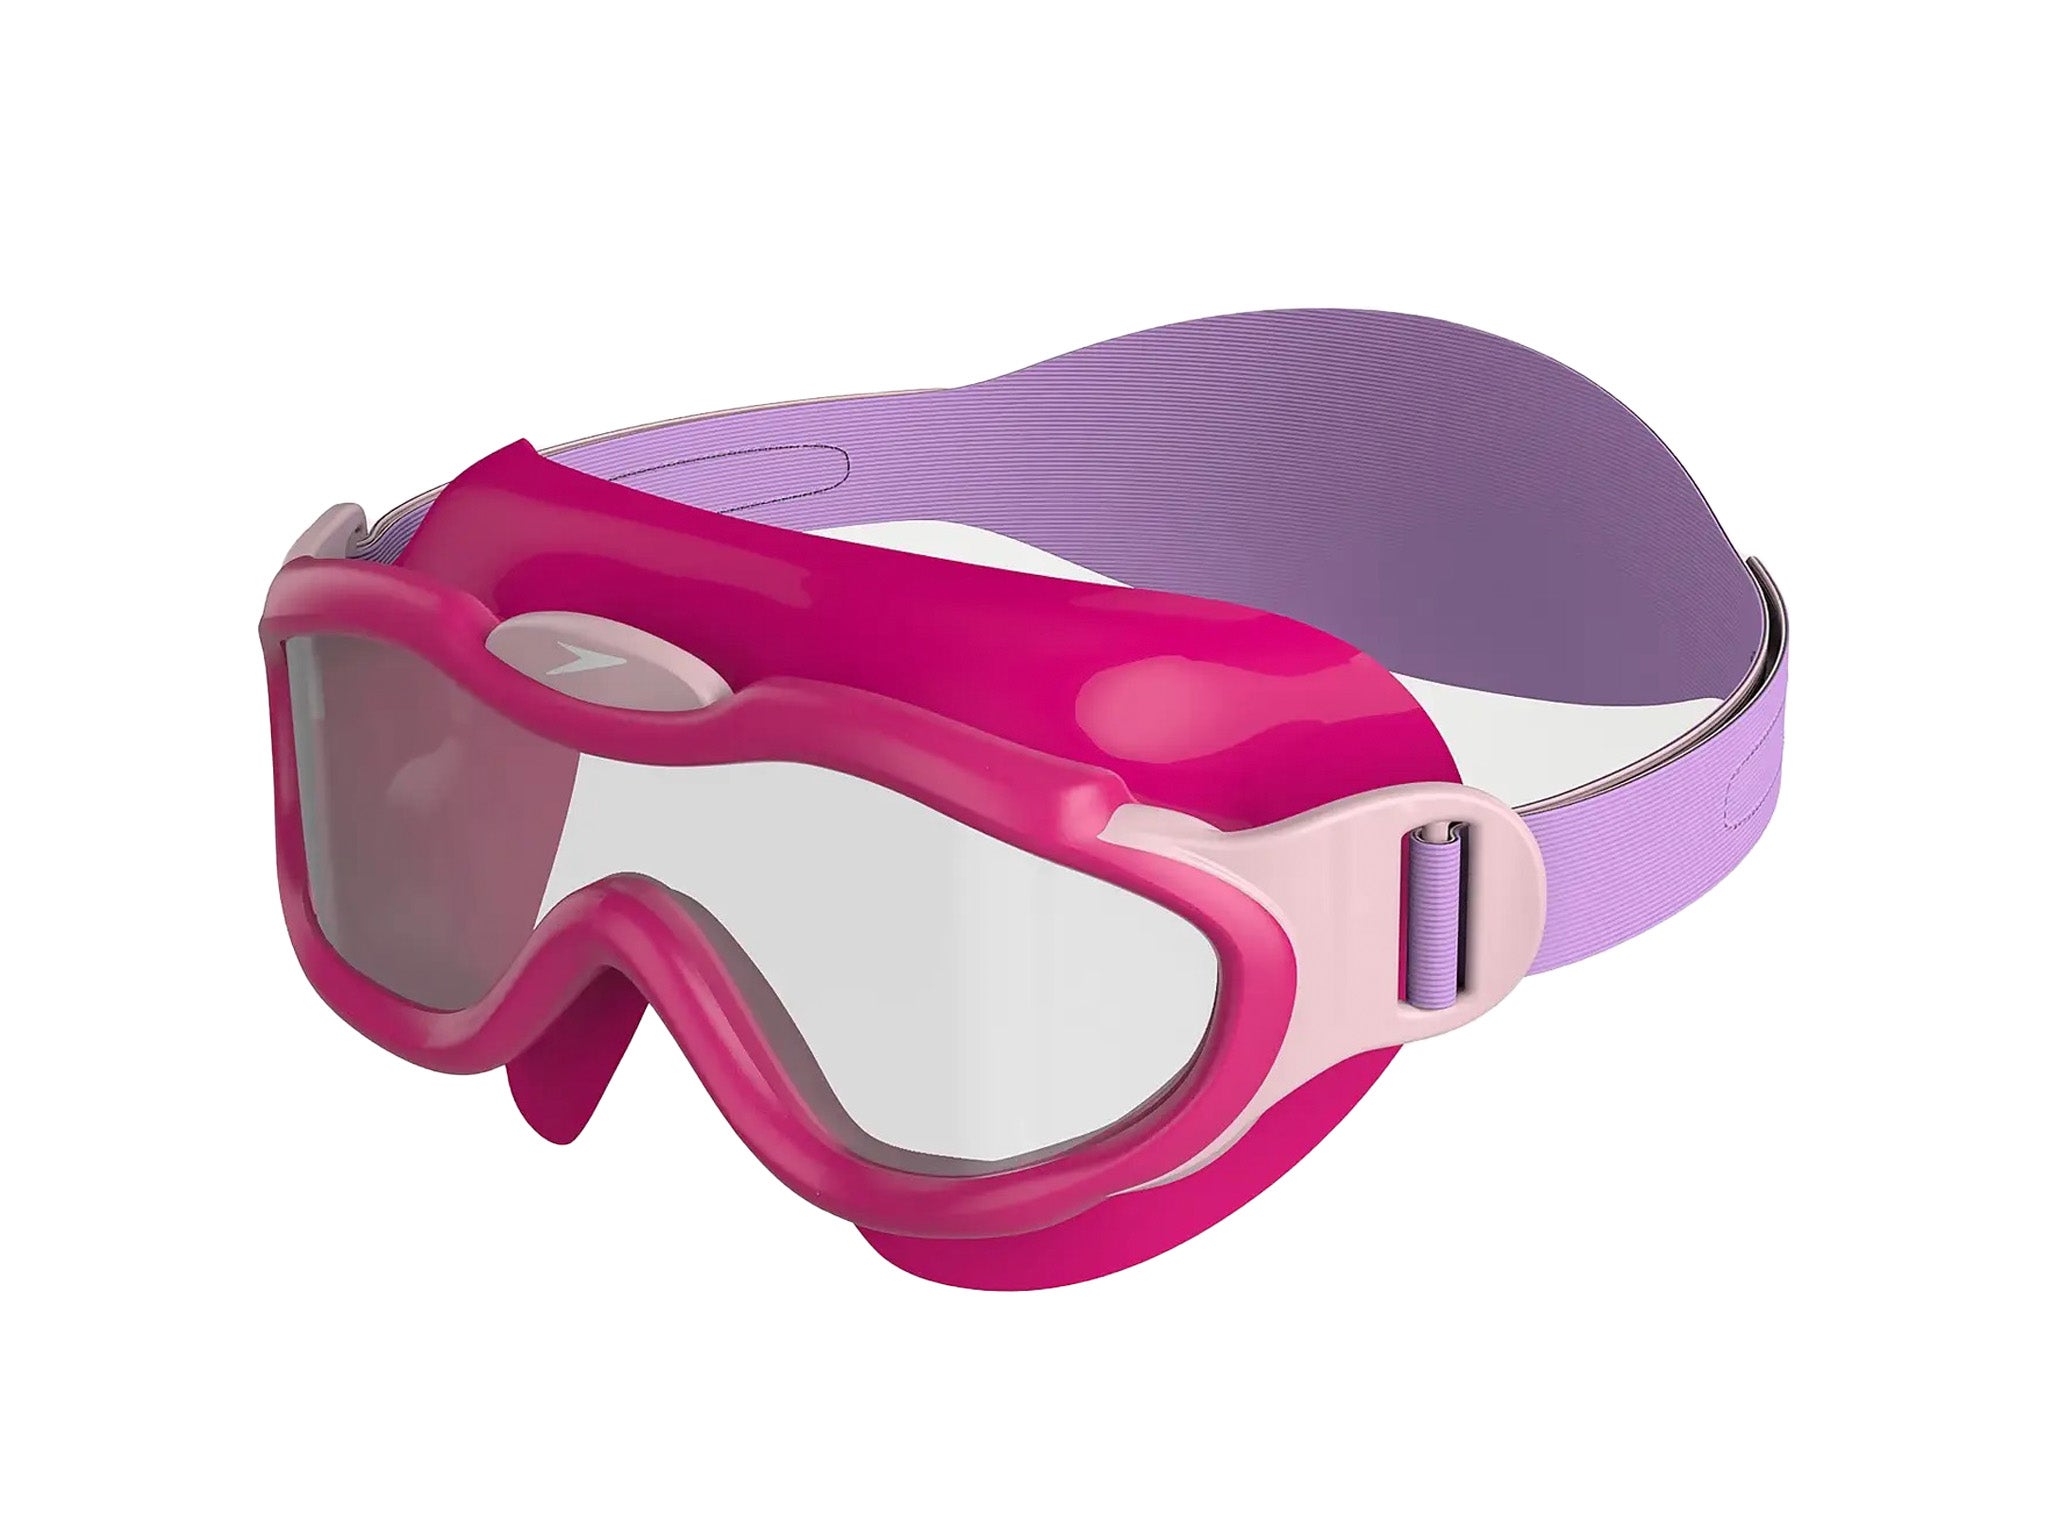 Speedo infant biofuse mask goggles pink.jpg